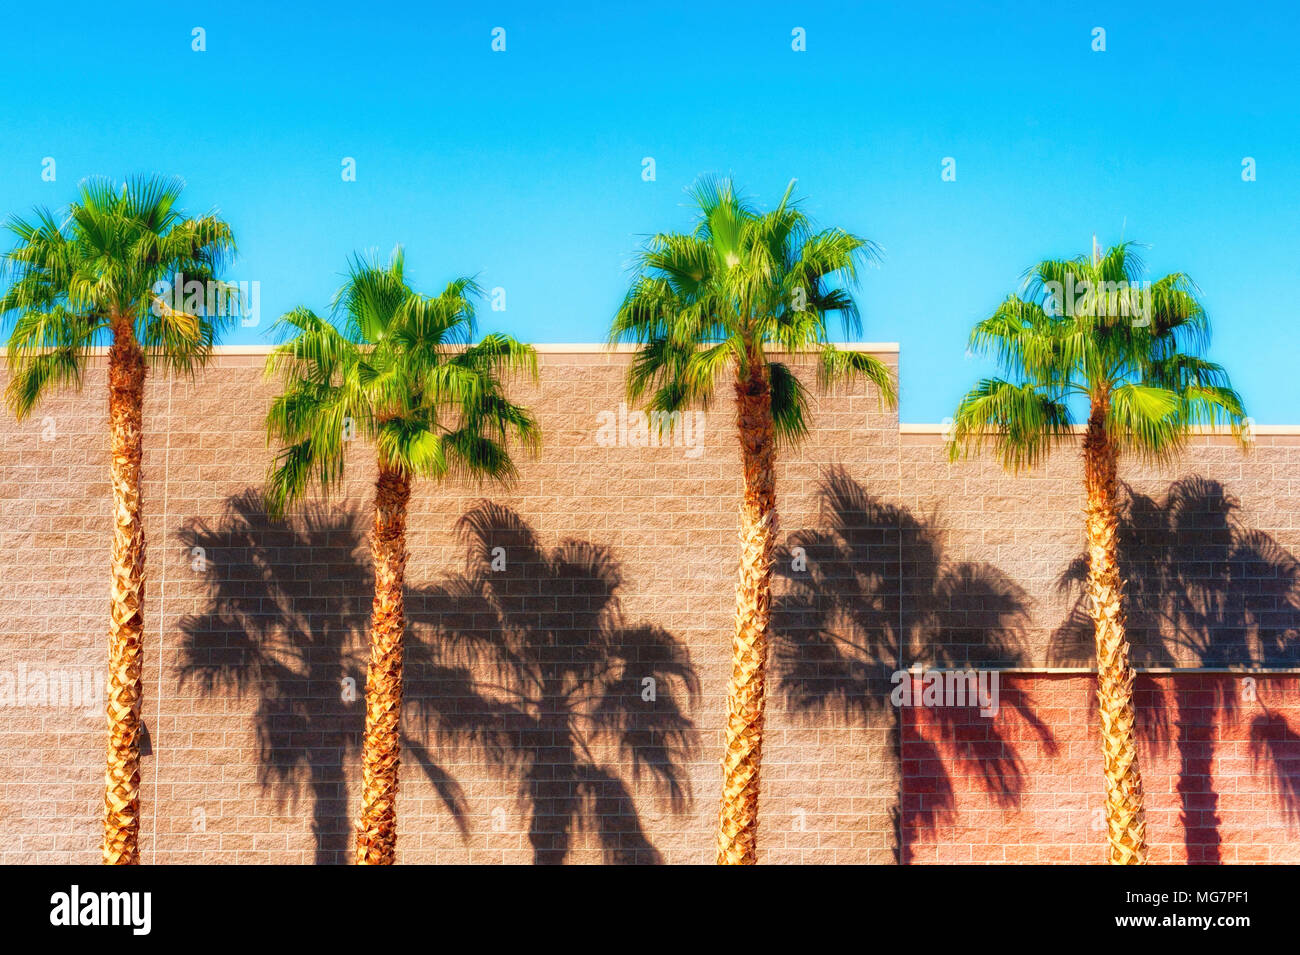 Palm trees cast shadows along a brick building under blue skies in Yuma, Arizona Stock Photo